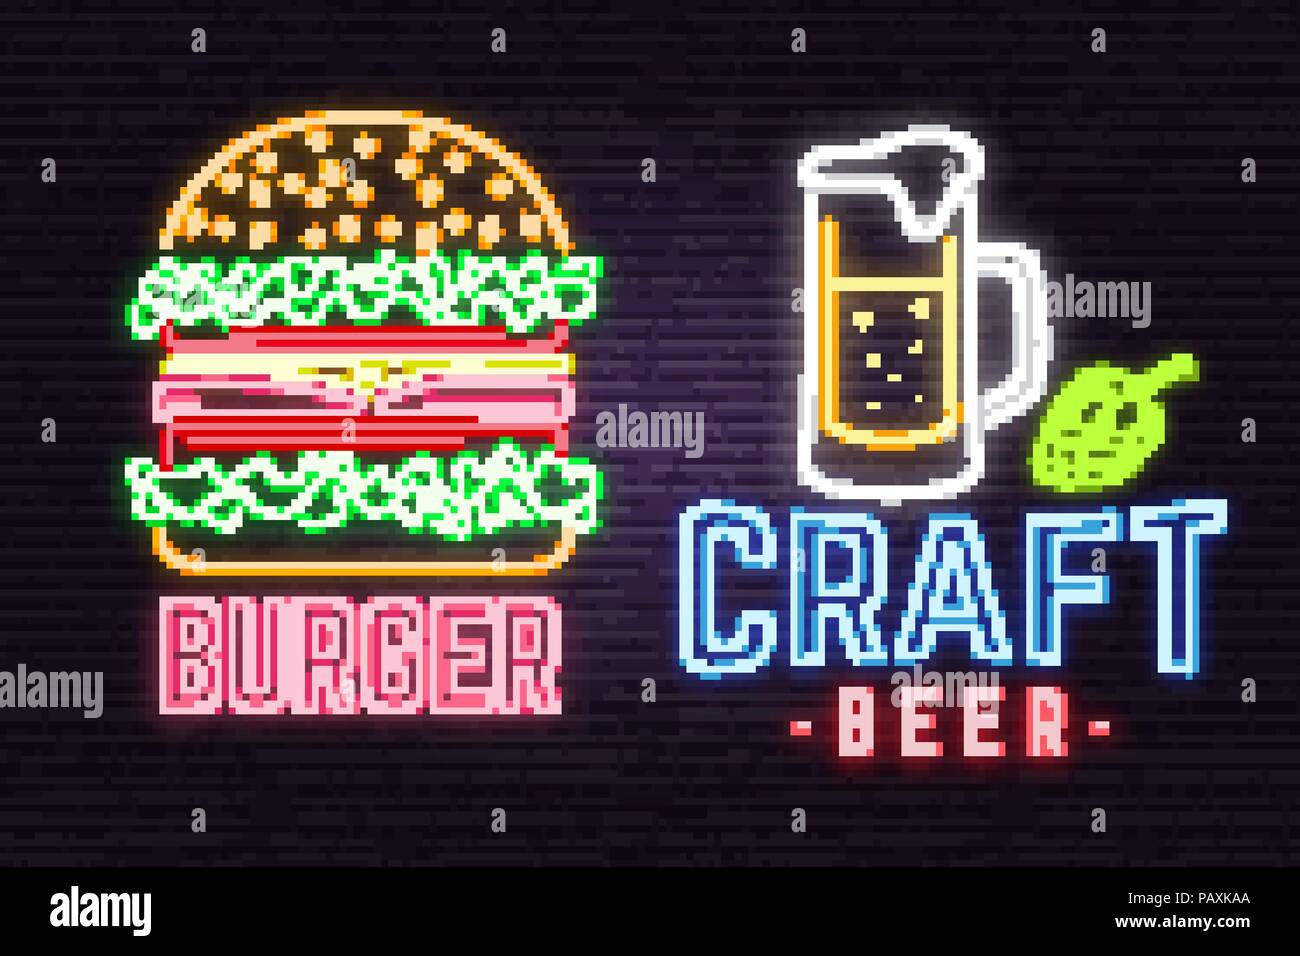 Retro neon burger and craft beer sign on brick wall background. Design for cafe, hotel,restaurant or motel. Vector illustration. Neon design for shop, bar, pub or fast food business. Light sign banner Stock Vector